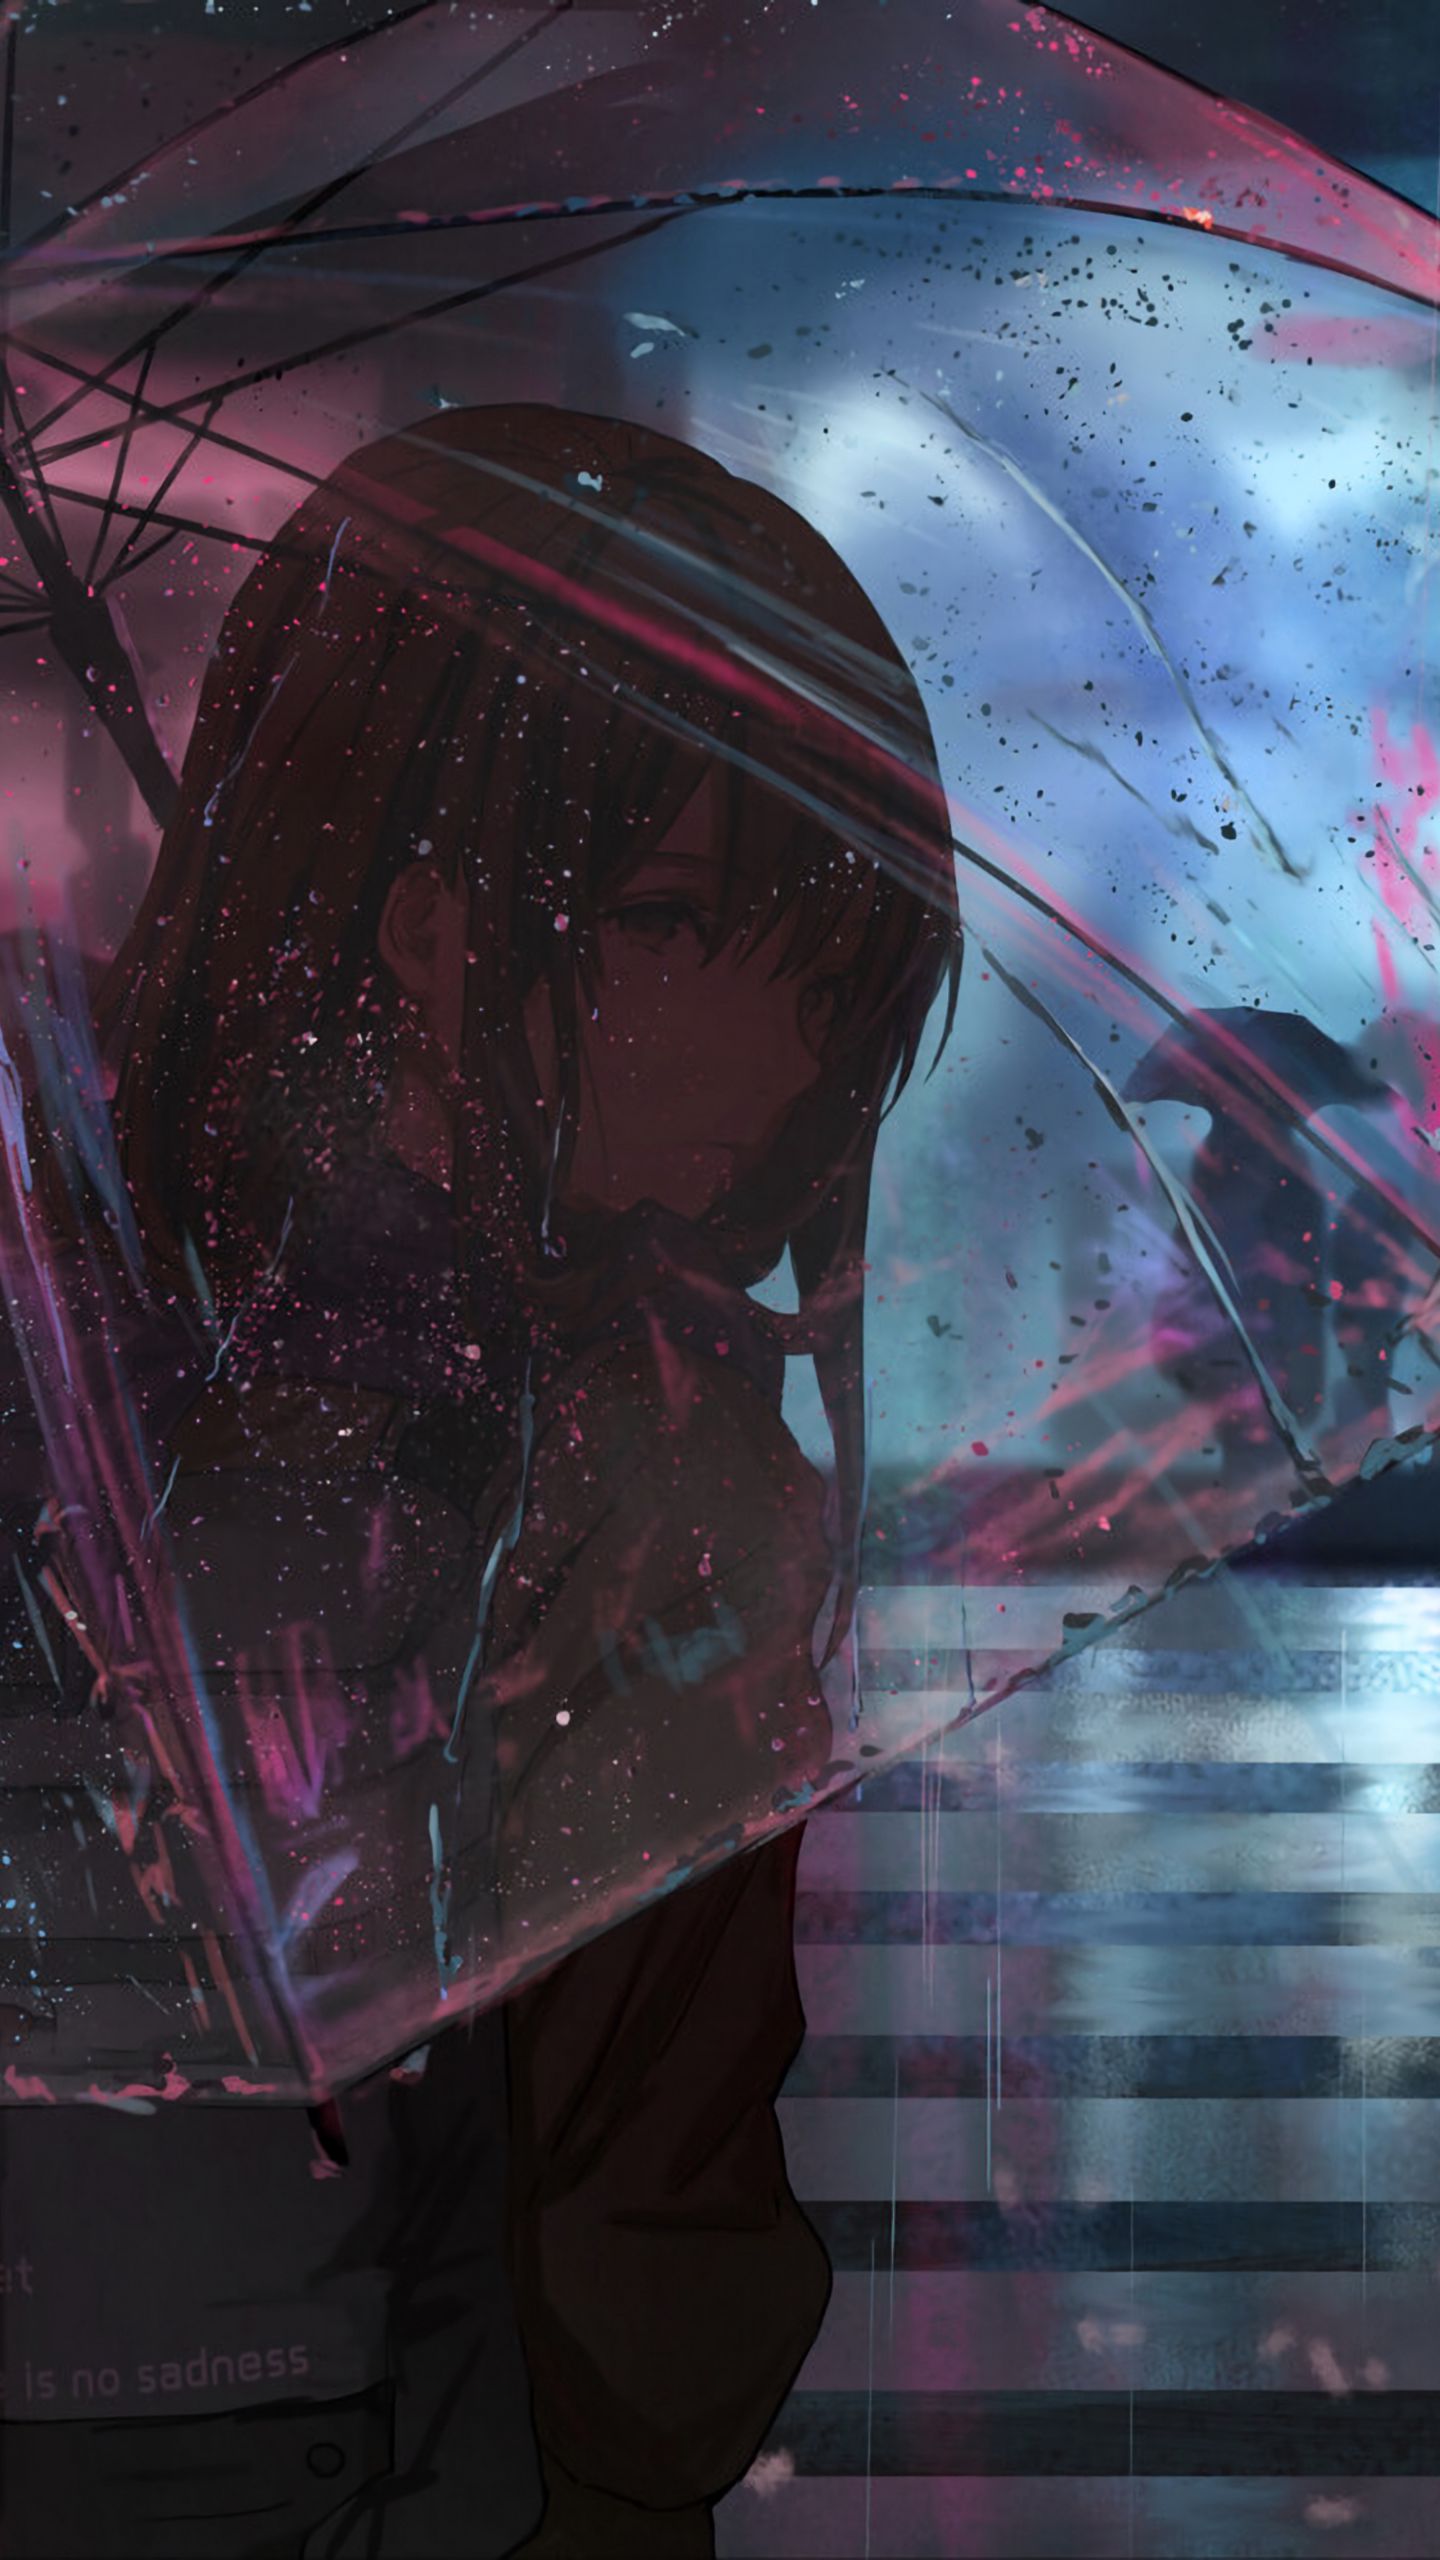 rain - Other & Anime Background Wallpapers on Desktop Nexus (Image 306313)